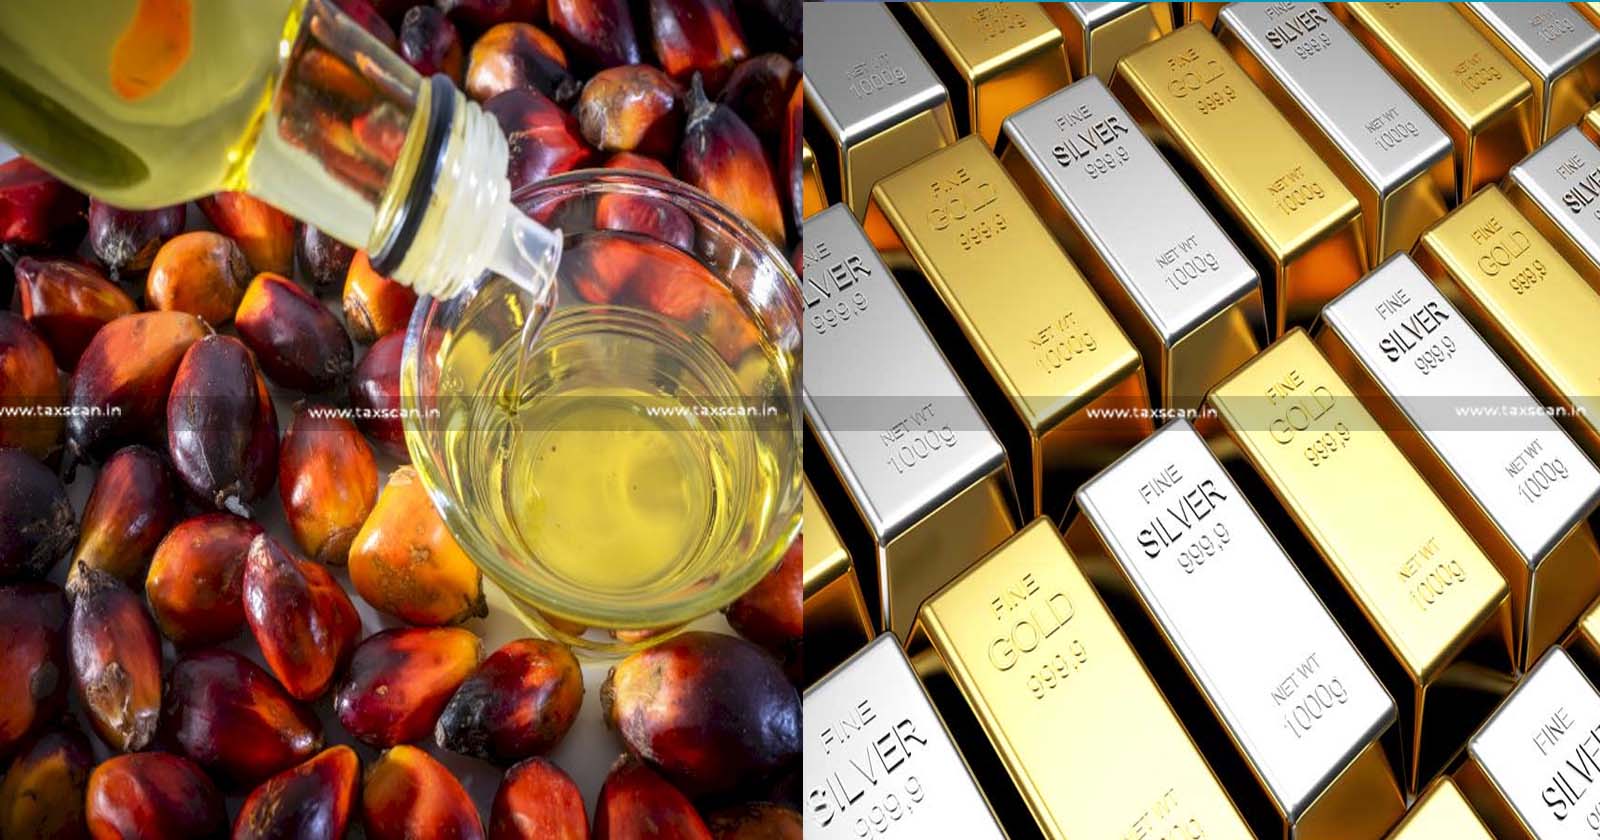 CBIC - notifies - Latest - Customs - Tariff Value - Palm Oil - Gold - Silver - Areca Nuts - taxscan